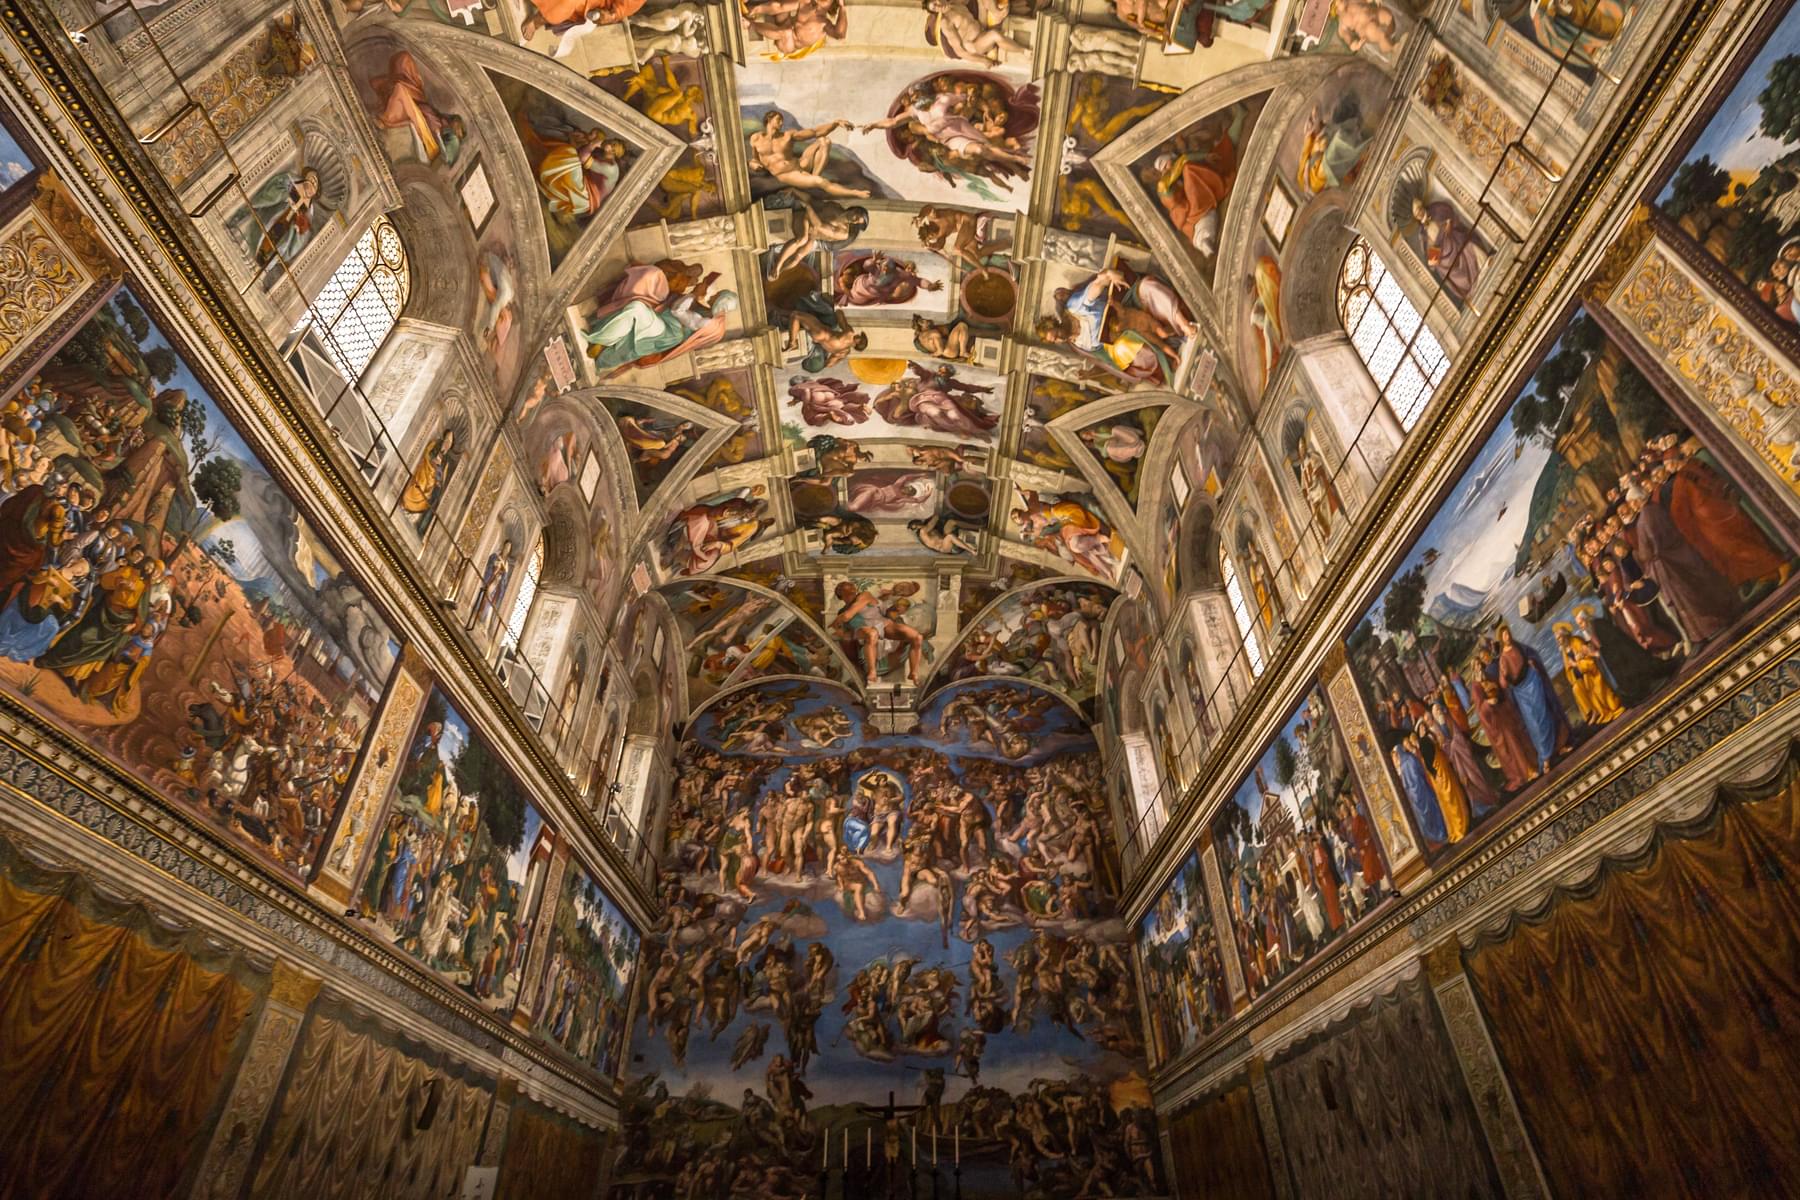 Explore the Sistine Chapel